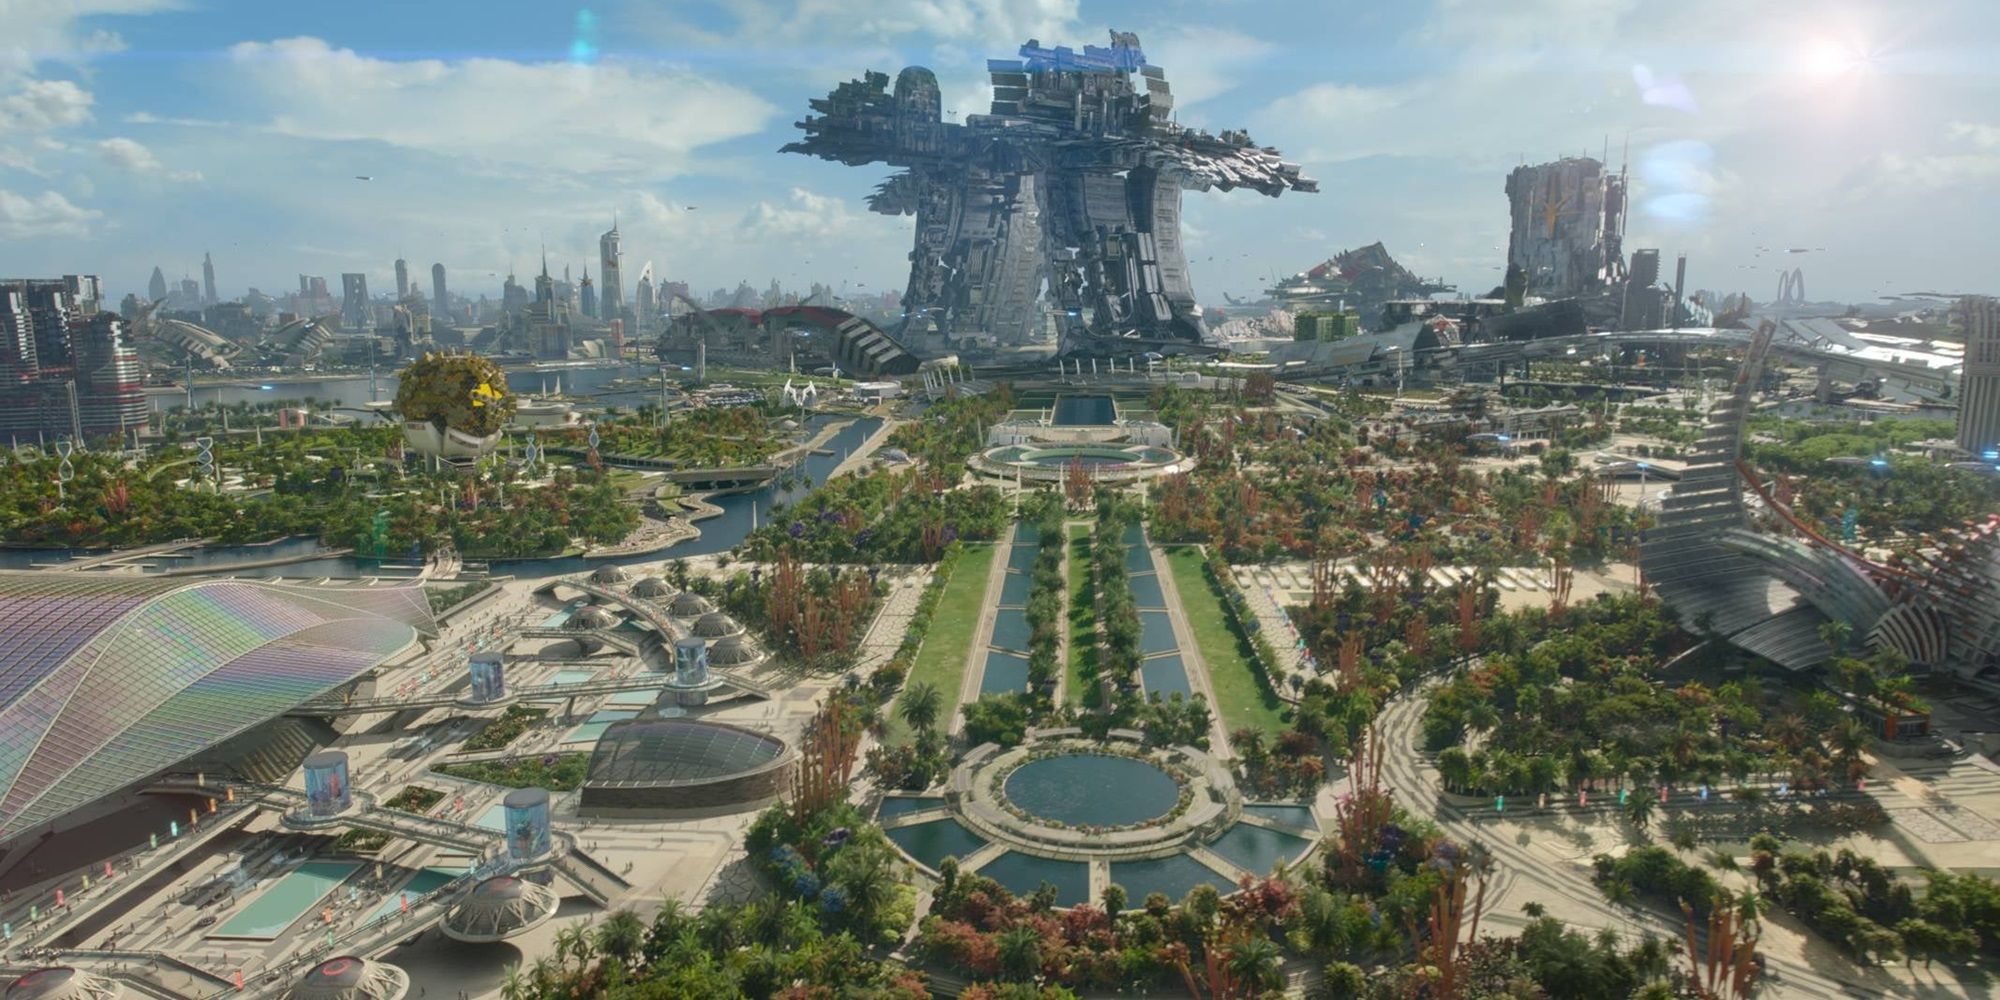 Aerial shot of the sprawling, sci-fi landscape of the MCU's Xandar